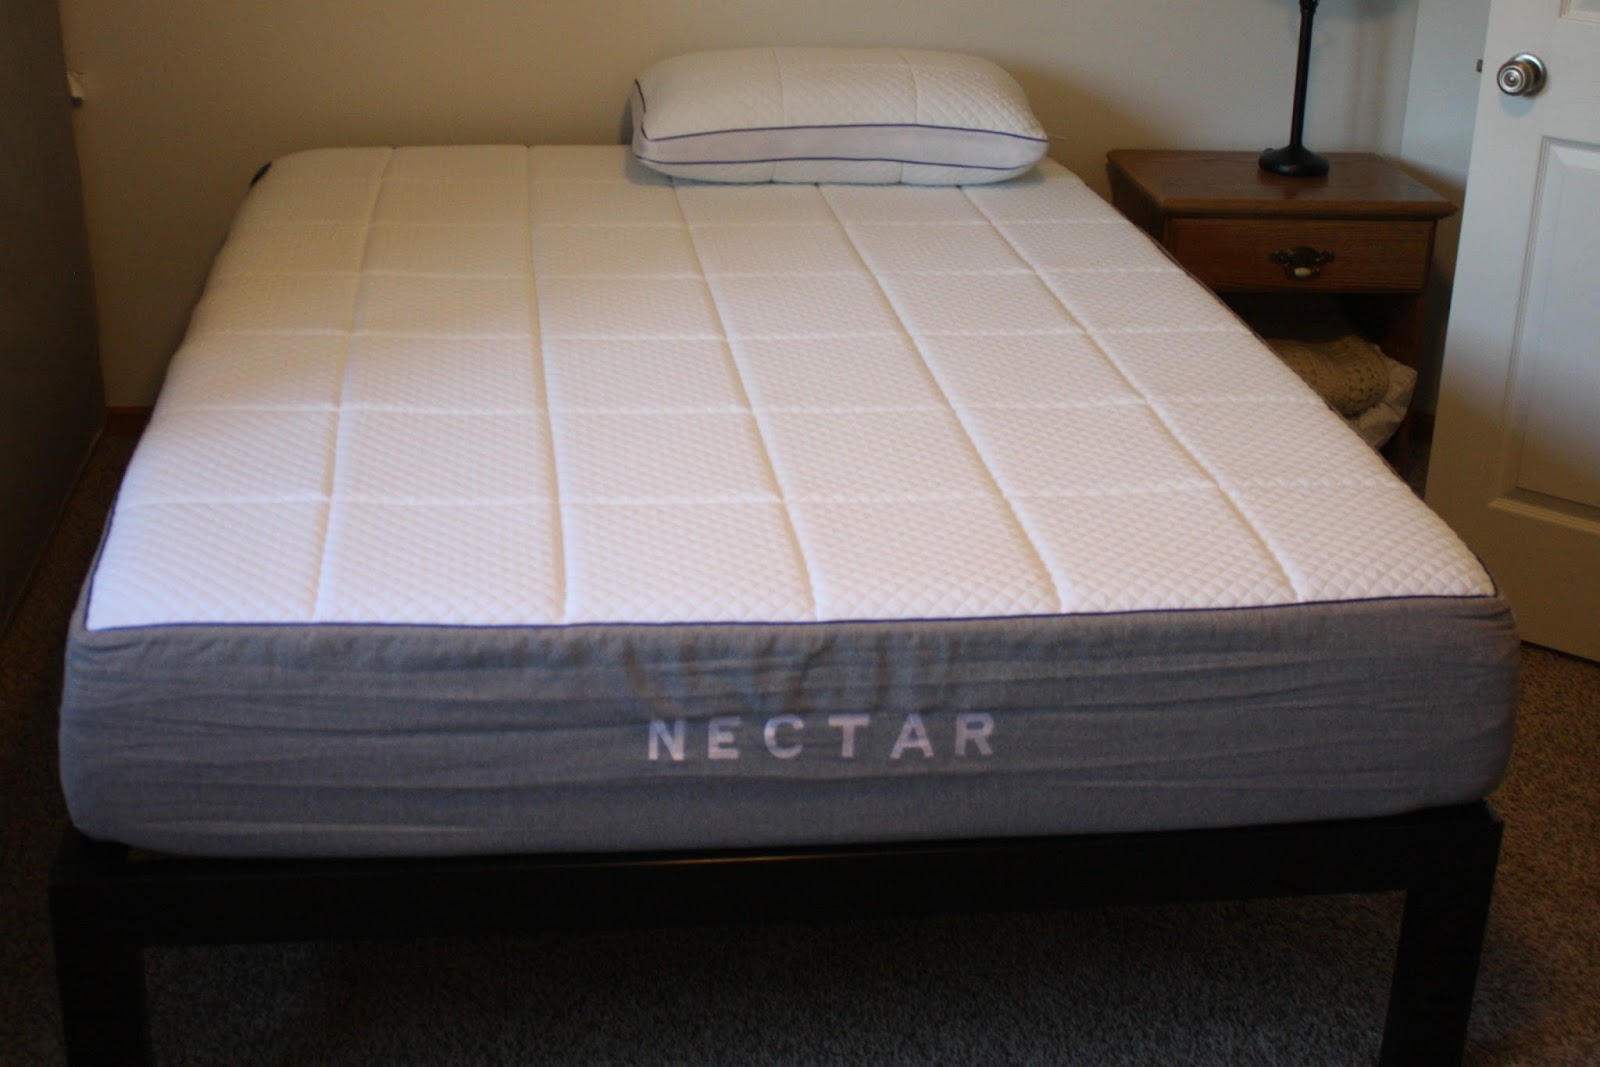 nectar queen size mattress dimensions